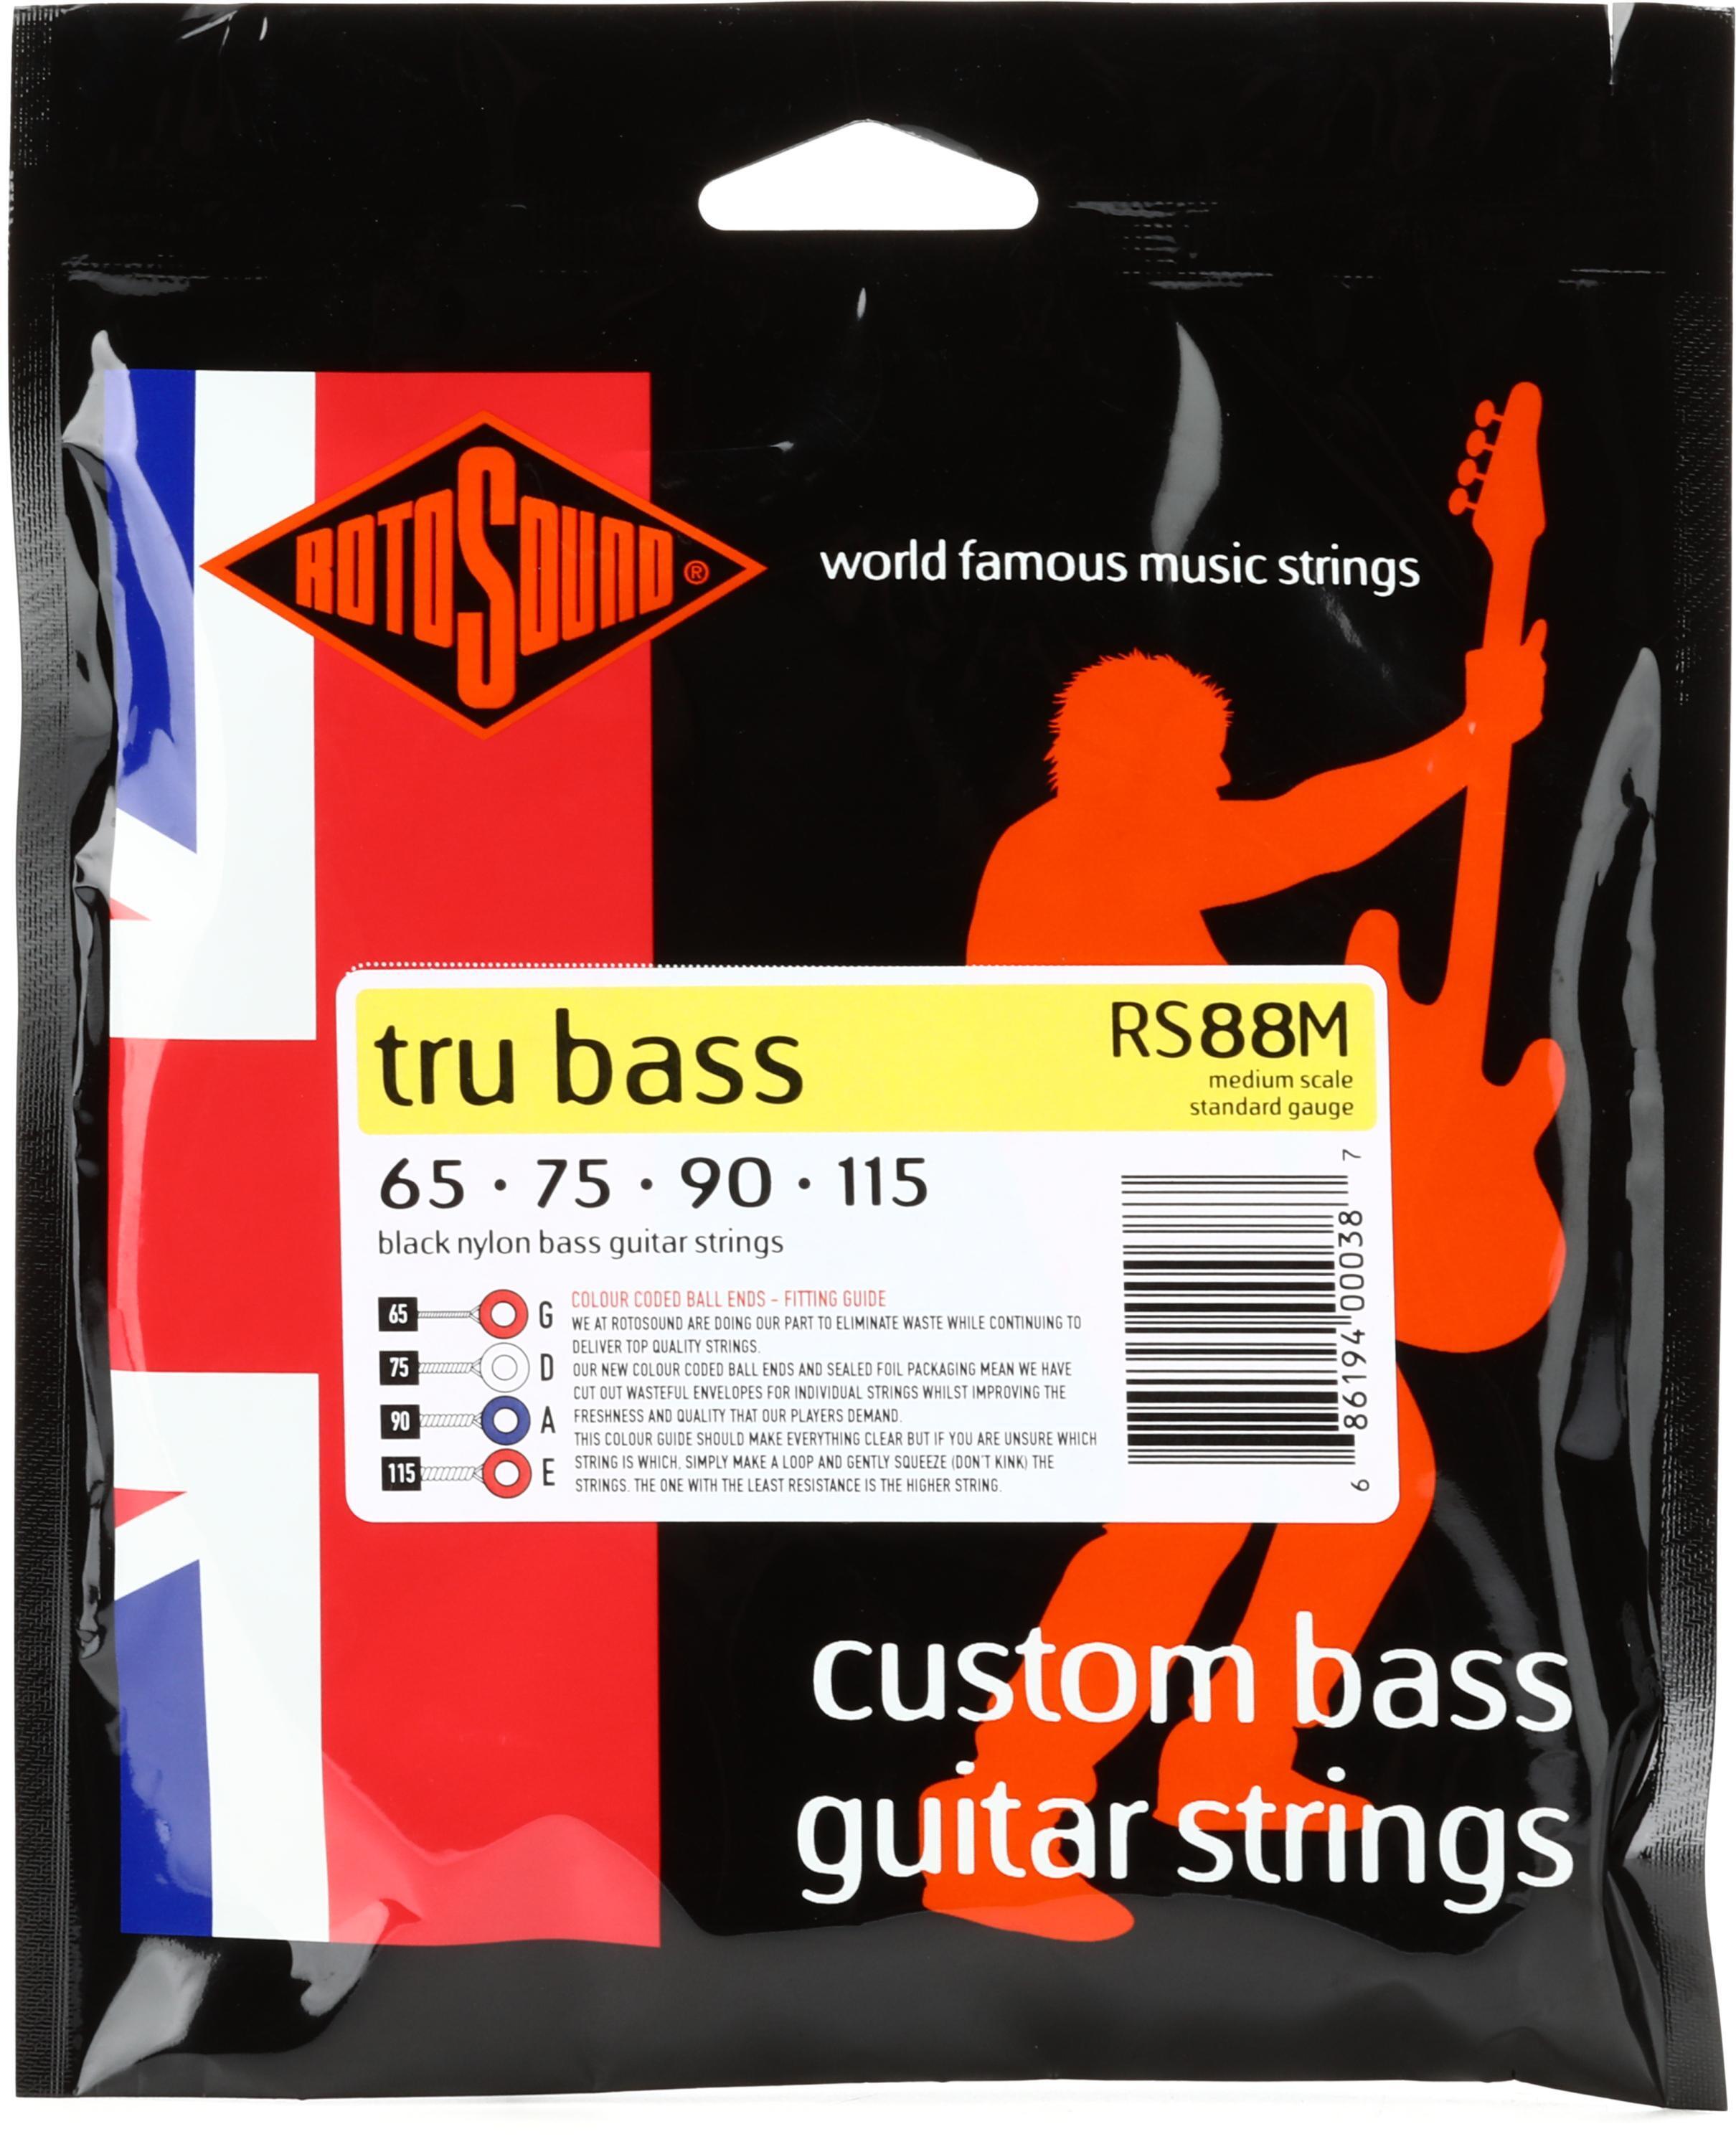 Rotosound RS88M Tru Bass 88 Black Nylon Tapewound Bass Guitar